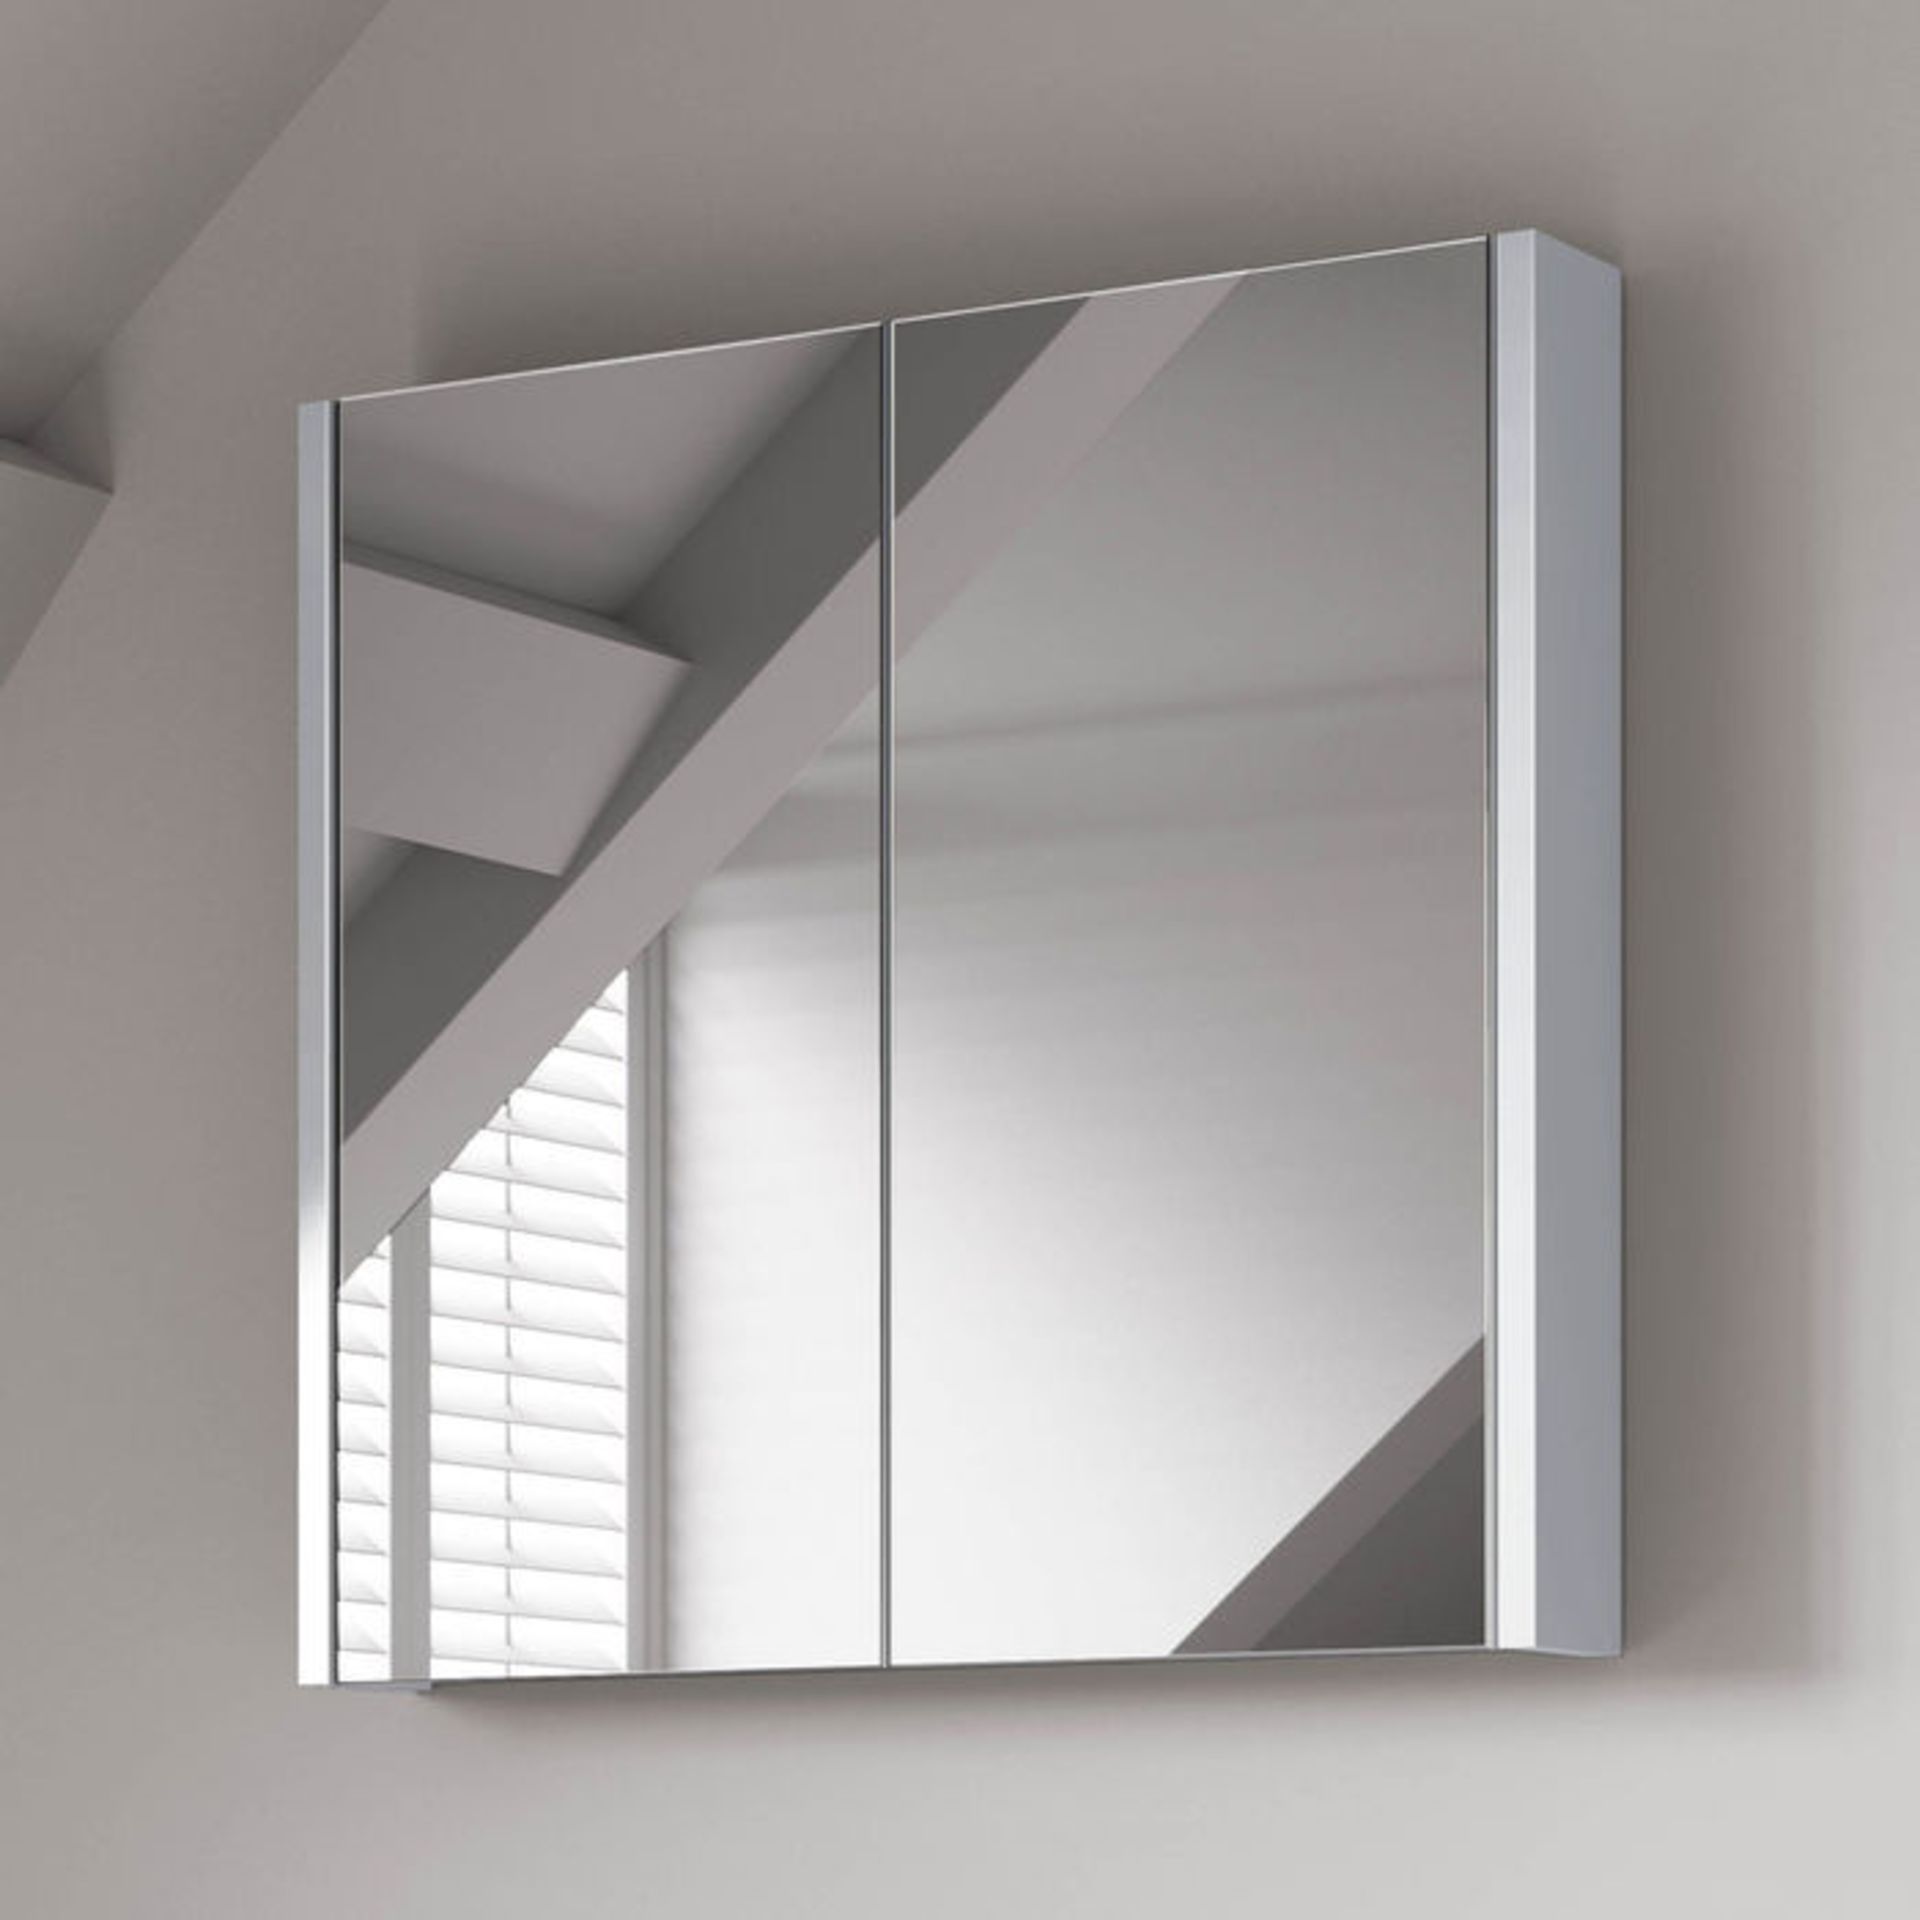 (AL234) 600mm Gloss White Double Door Mirror Cabinet. RRP £174.99. Sleek contemporary design